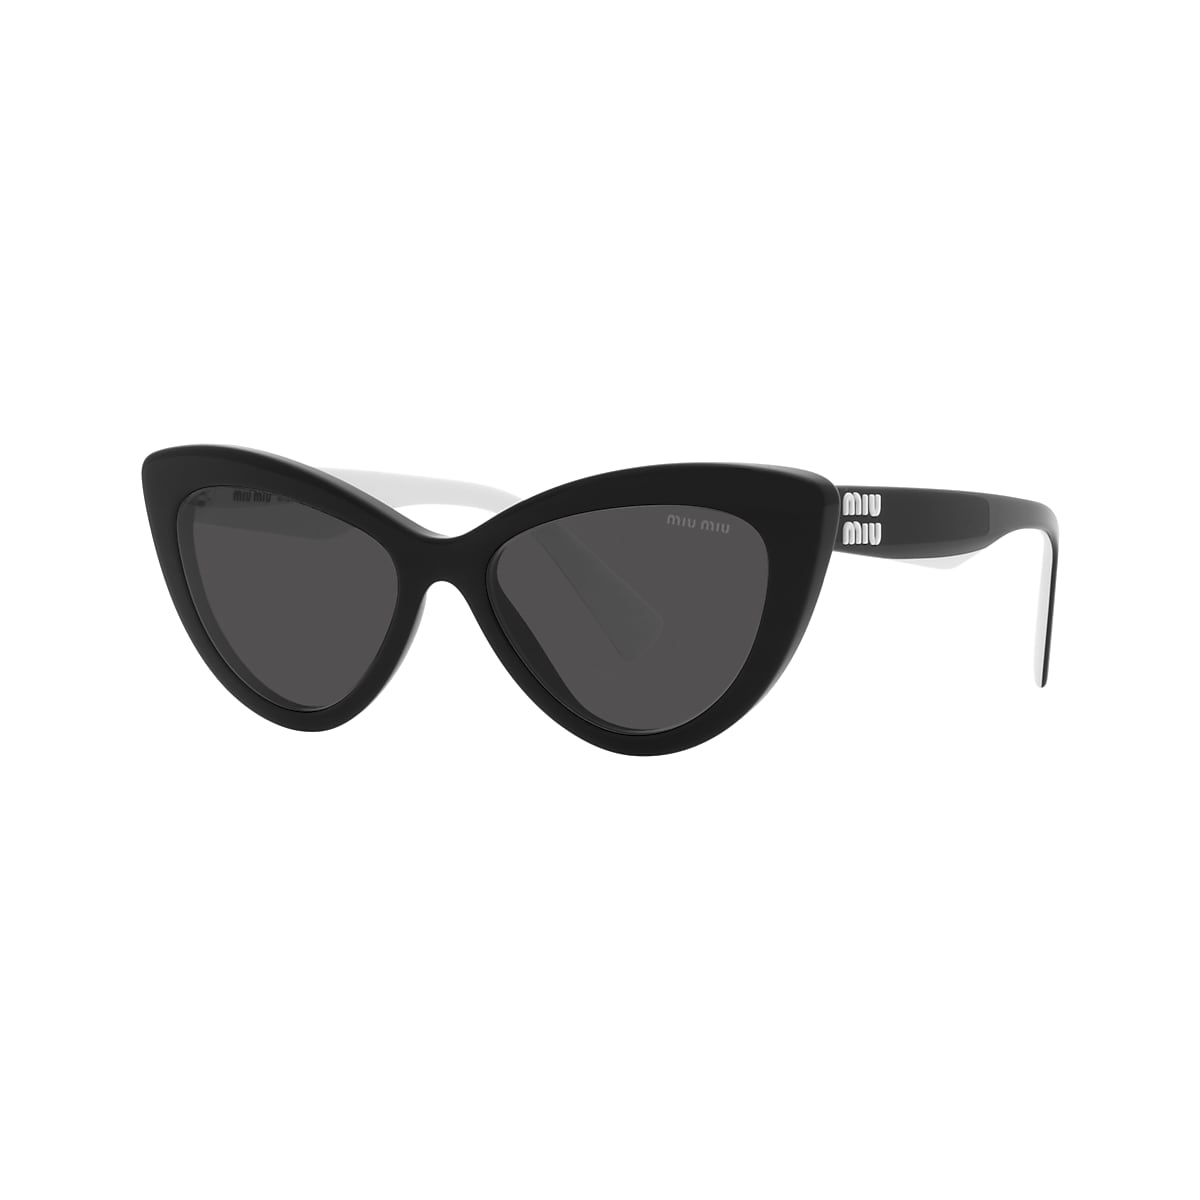 Miu Miu MU 11WS 54 Dark Grey & Black Sunglasses